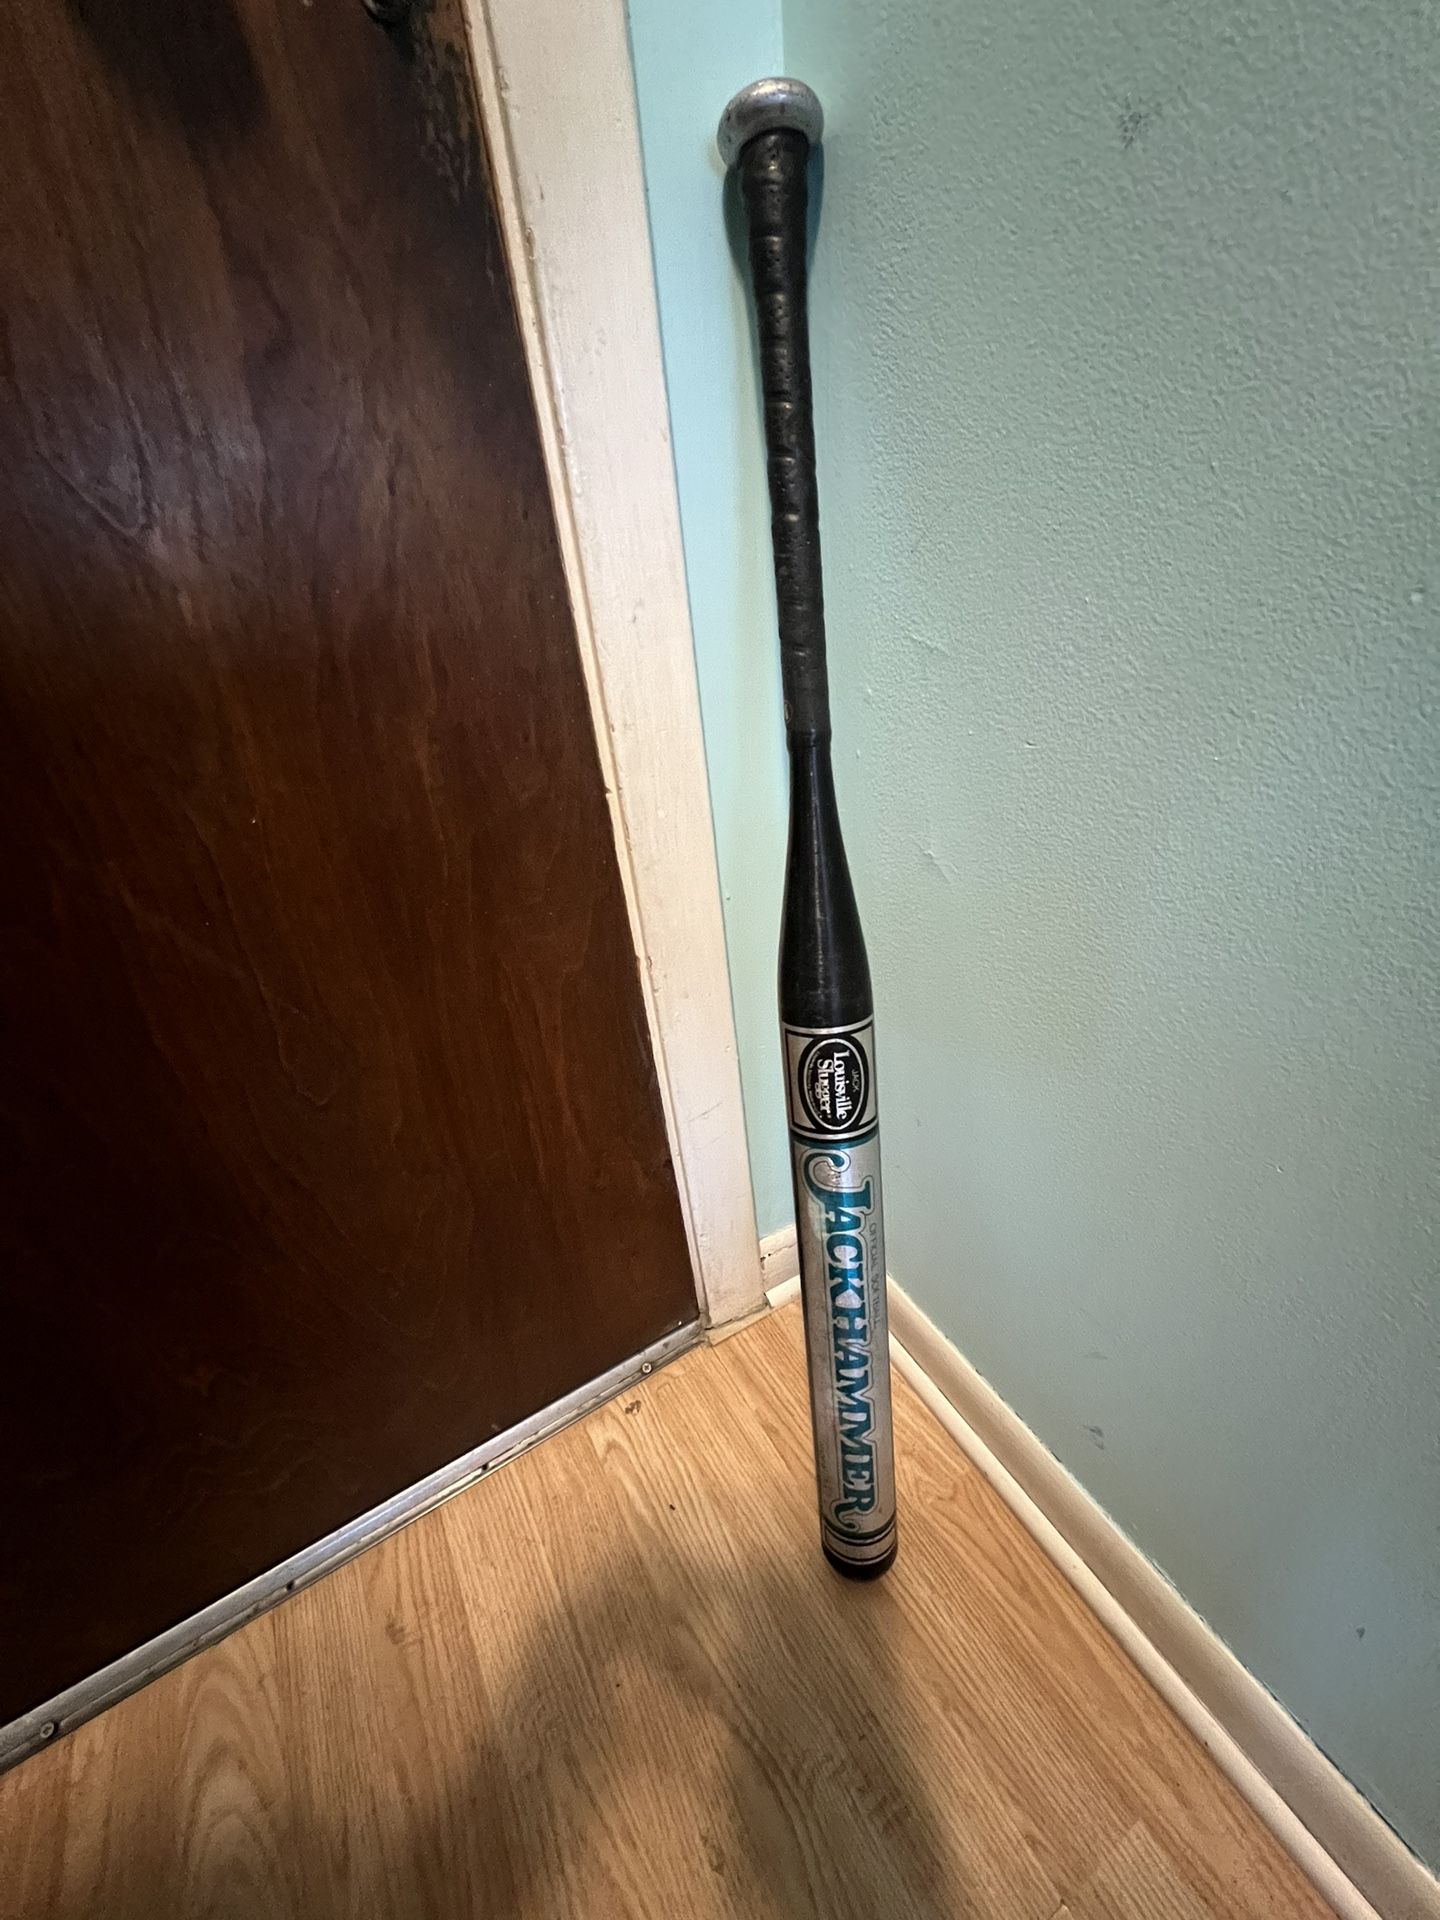 Louisville Slugger “JackHammer” Softball Bat 34” / 29 OZ